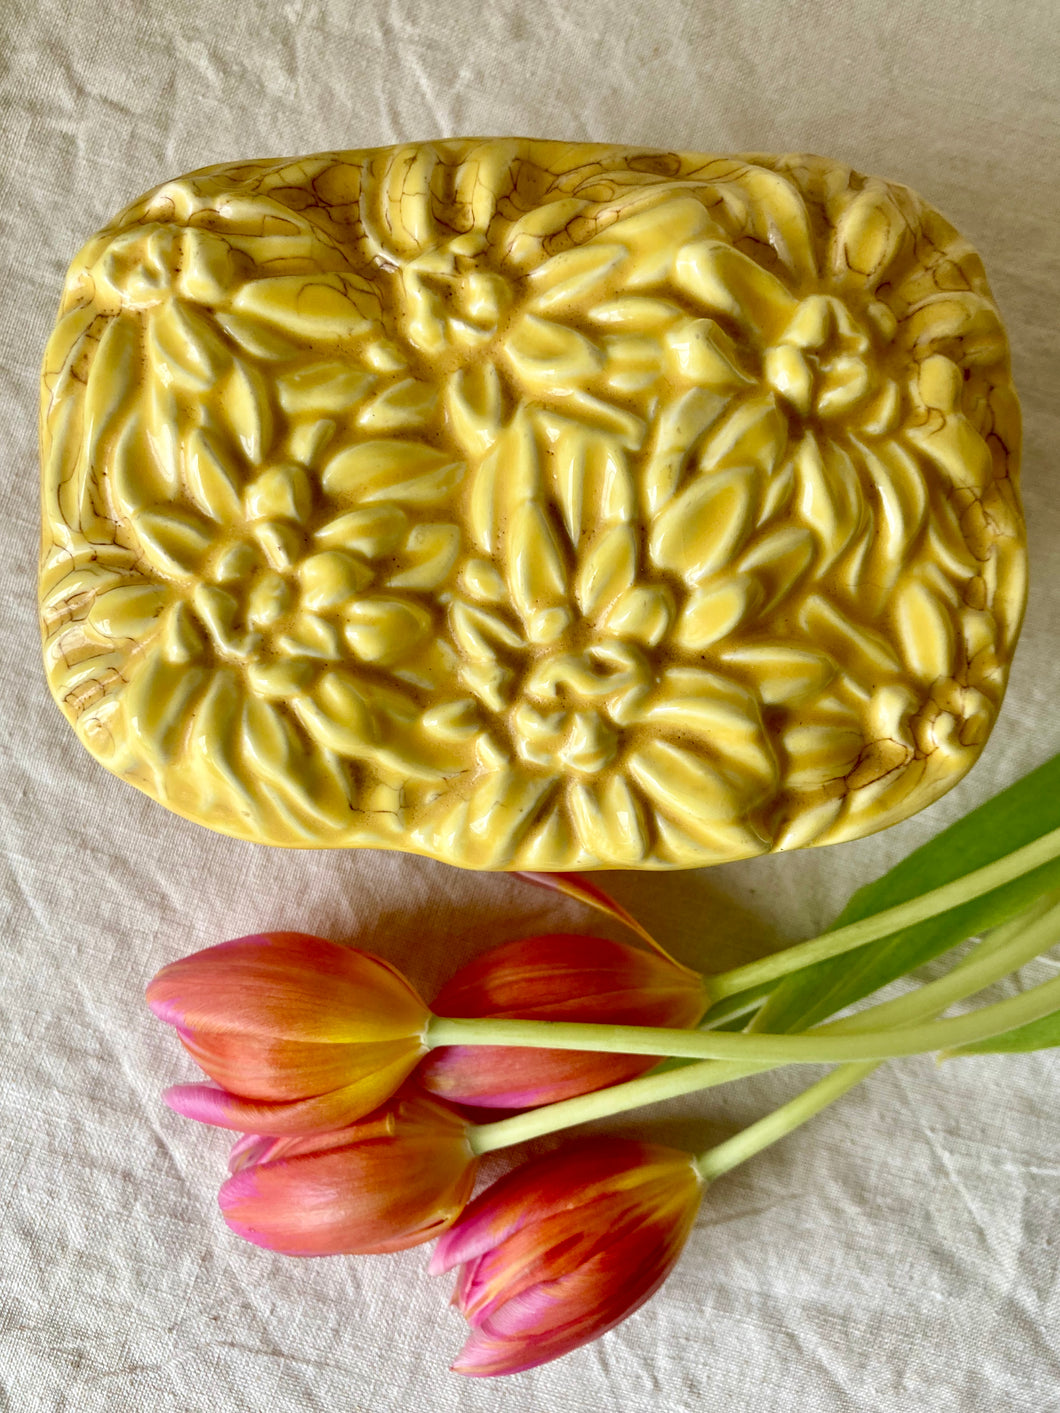 Sunflower butter dish by Sylvac